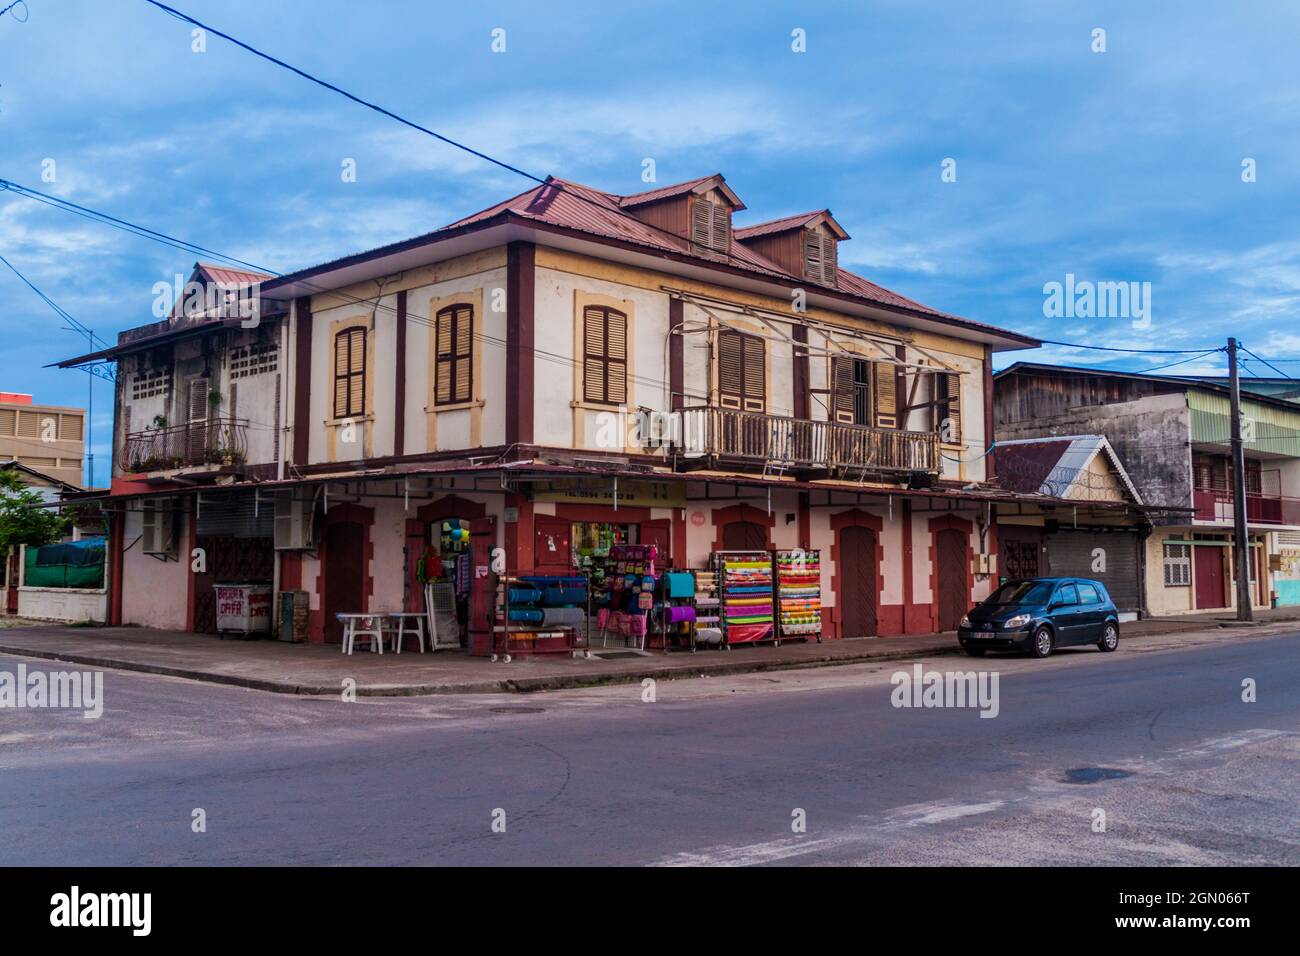 ST LAURENT DU MARONI, FRENCH GUIANA - AUGUST 4, 2015: Colonial buildings in St Laurent du Maroni, French Guiana. Stock Photo